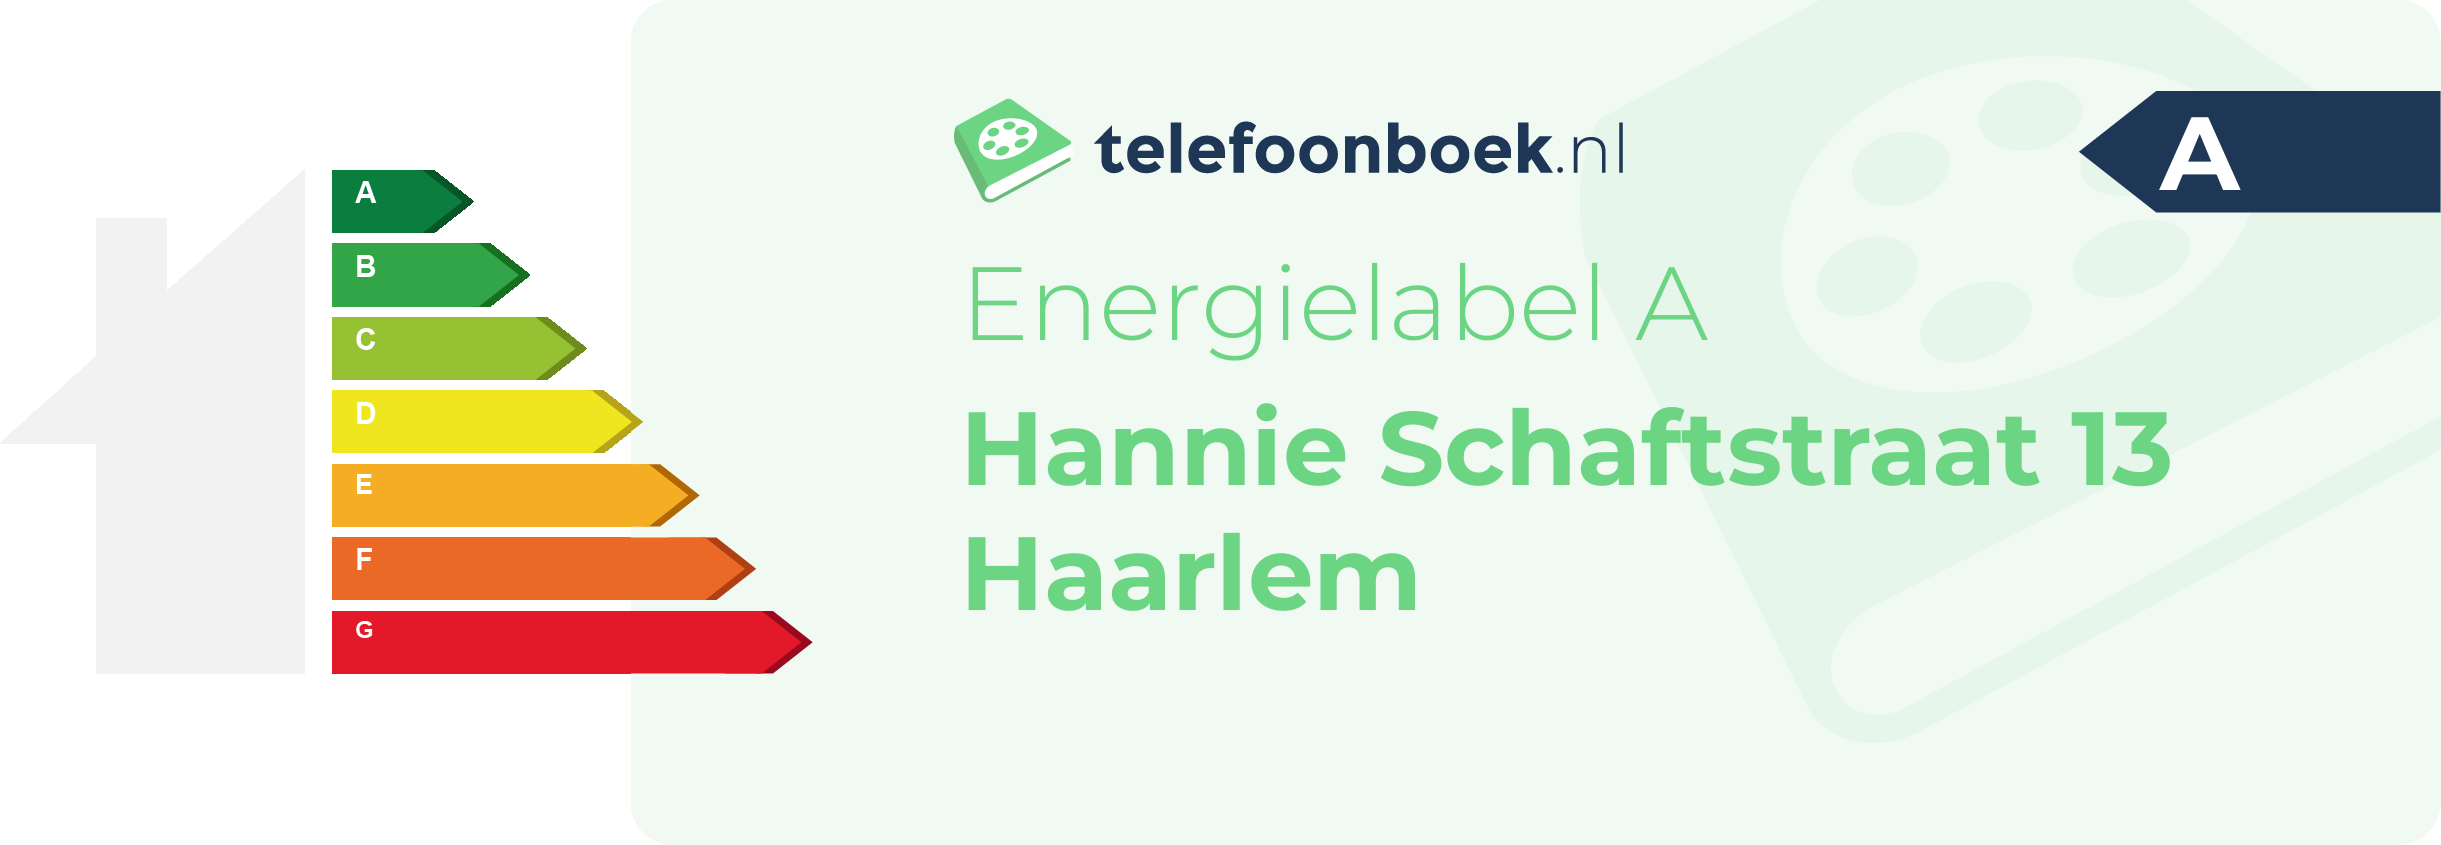 Energielabel Hannie Schaftstraat 13 Haarlem